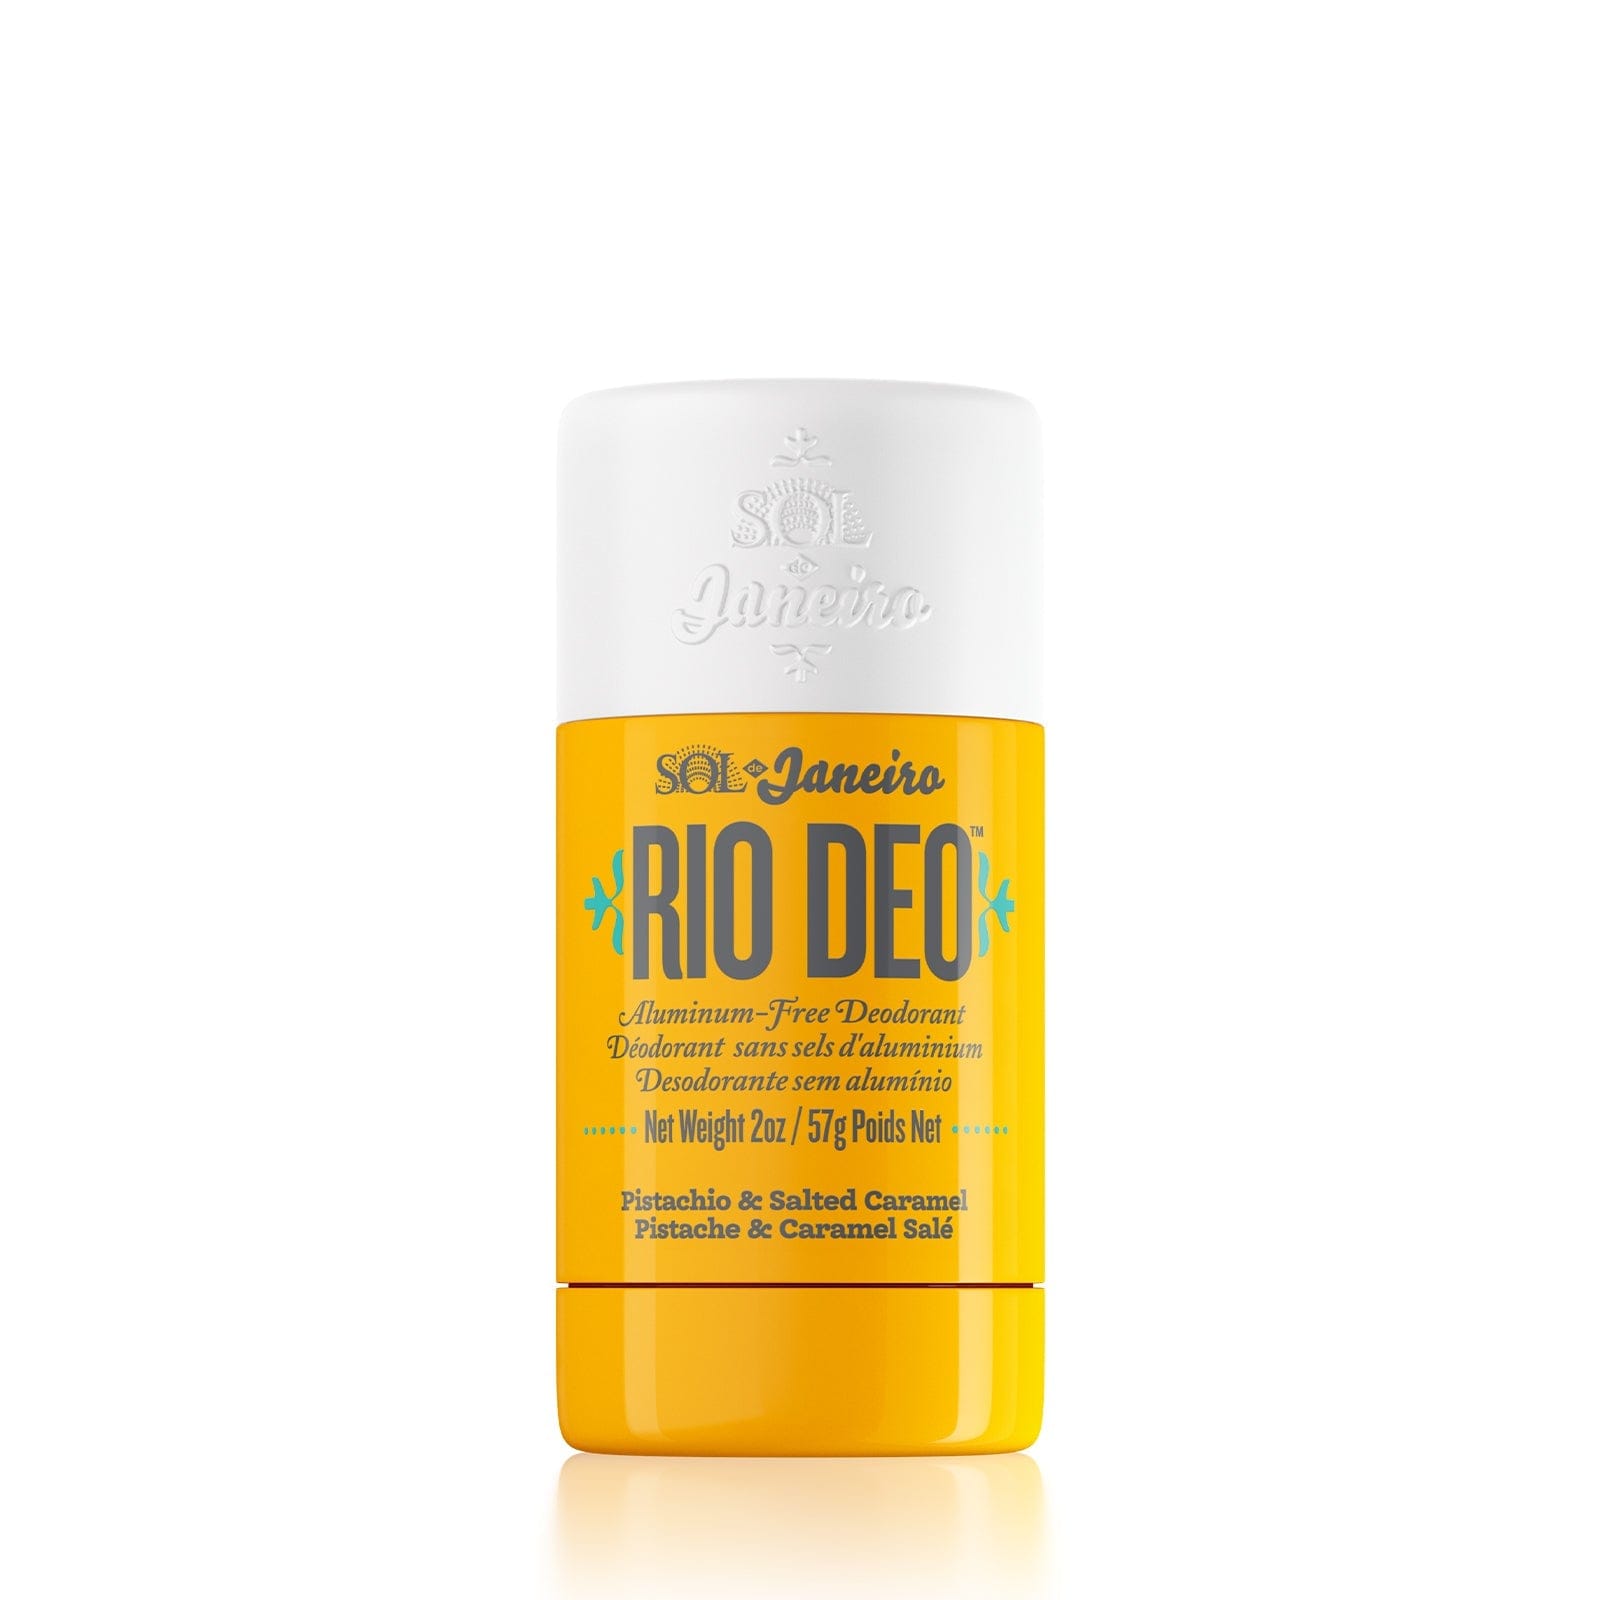 Rio Deo Aluminum-Free Deodorant Sol de Janeiro